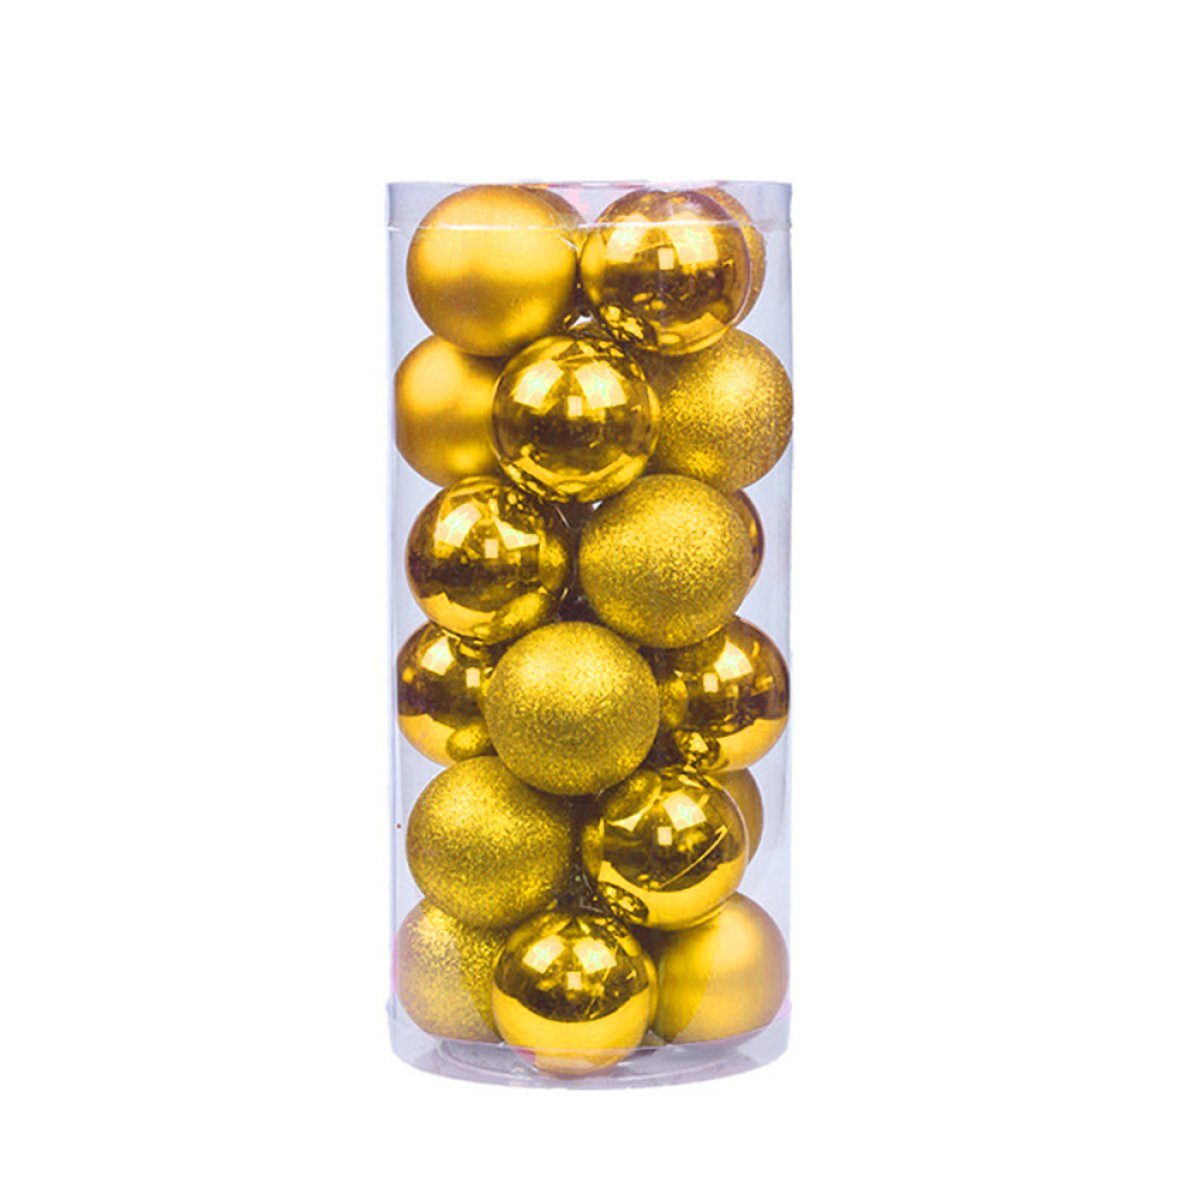 Gold(6cm) Verwendung Christbaumschmuck Zeaicos Weihnachtsbaumschmuck für Ornament, Weihnachtsbaumkugeln,